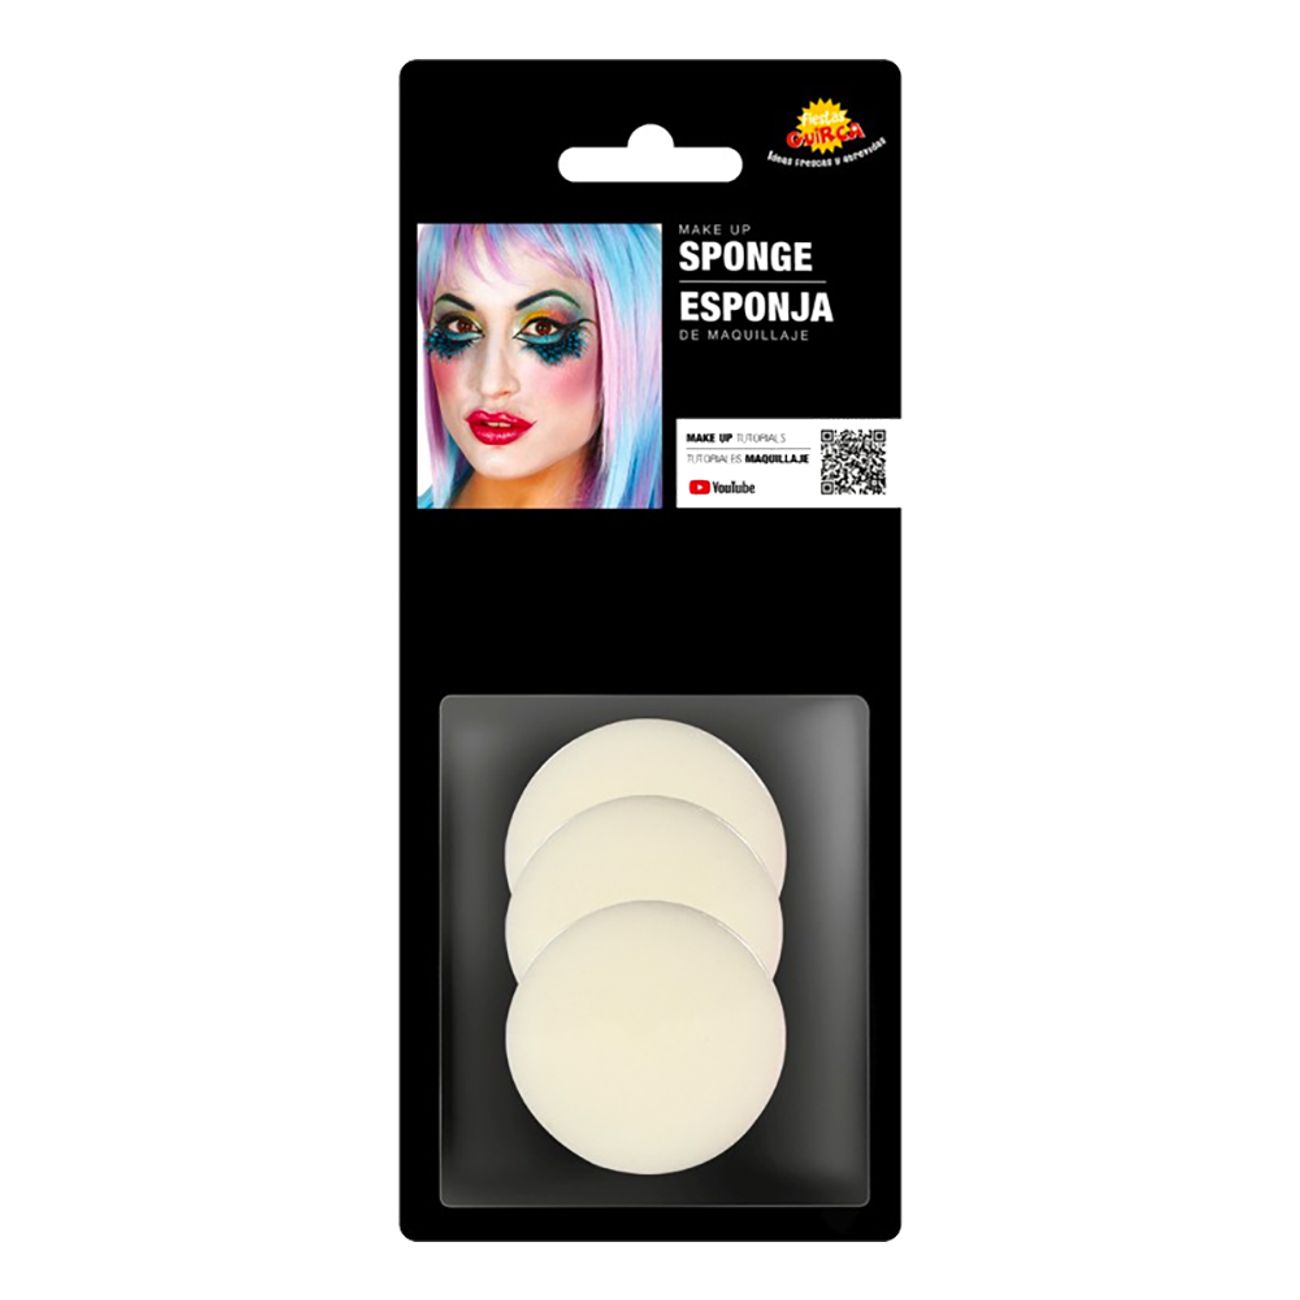 make-up-sponge-81780-1